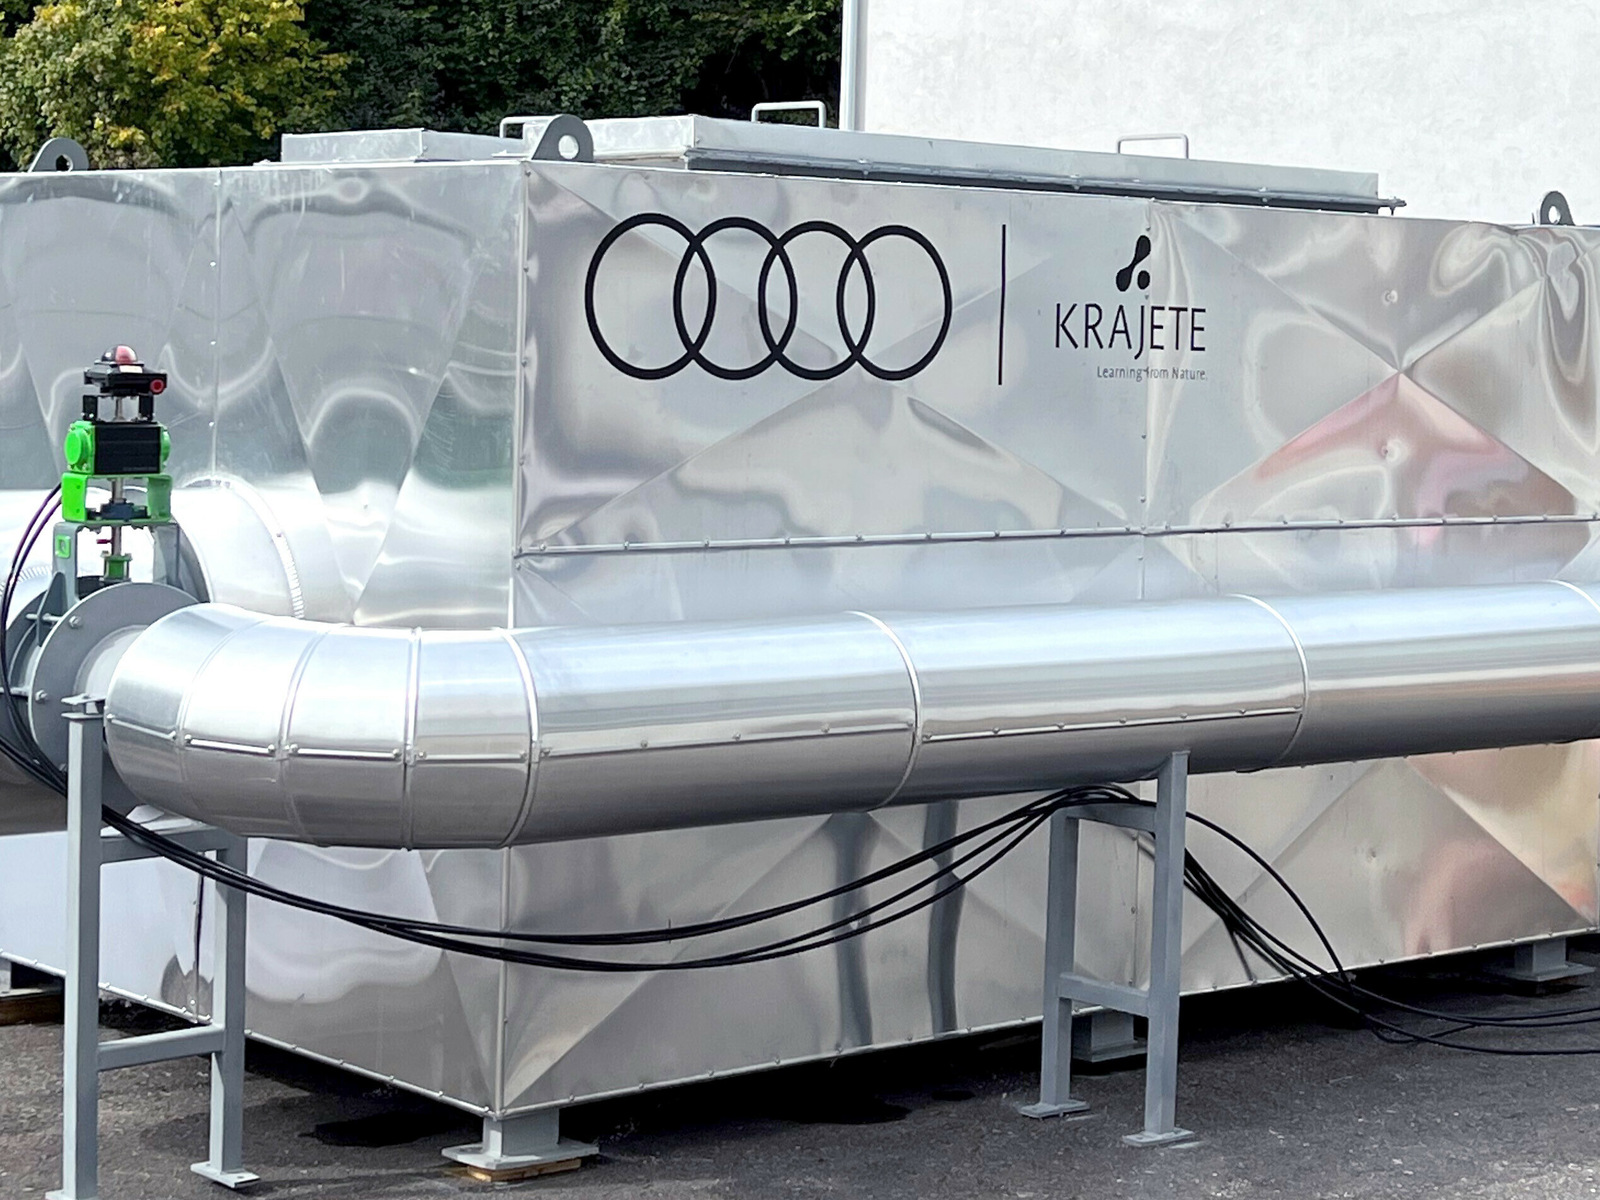 Audi setzt auf neue CO2-Filtermethode